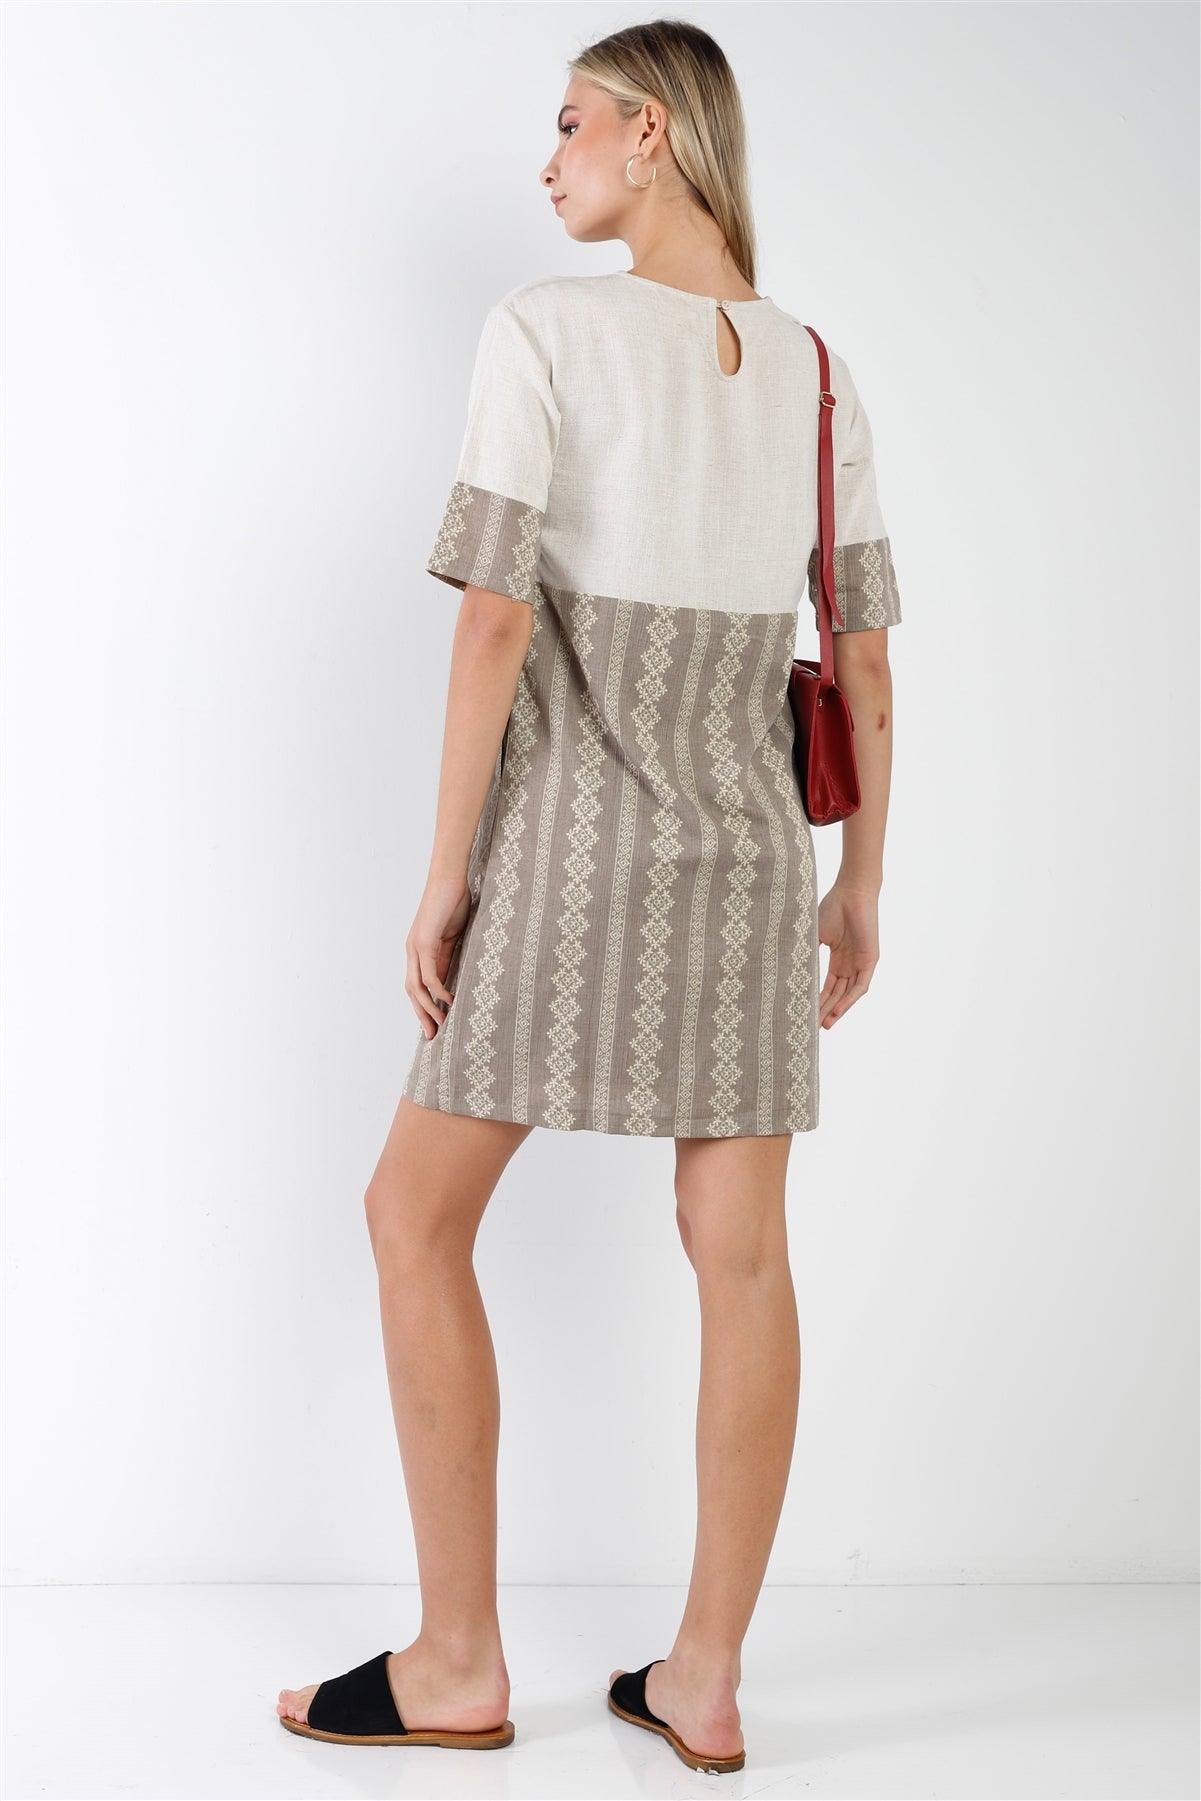 Brown Contrast Design Round Neck Shift Boho Dress /2-2-2